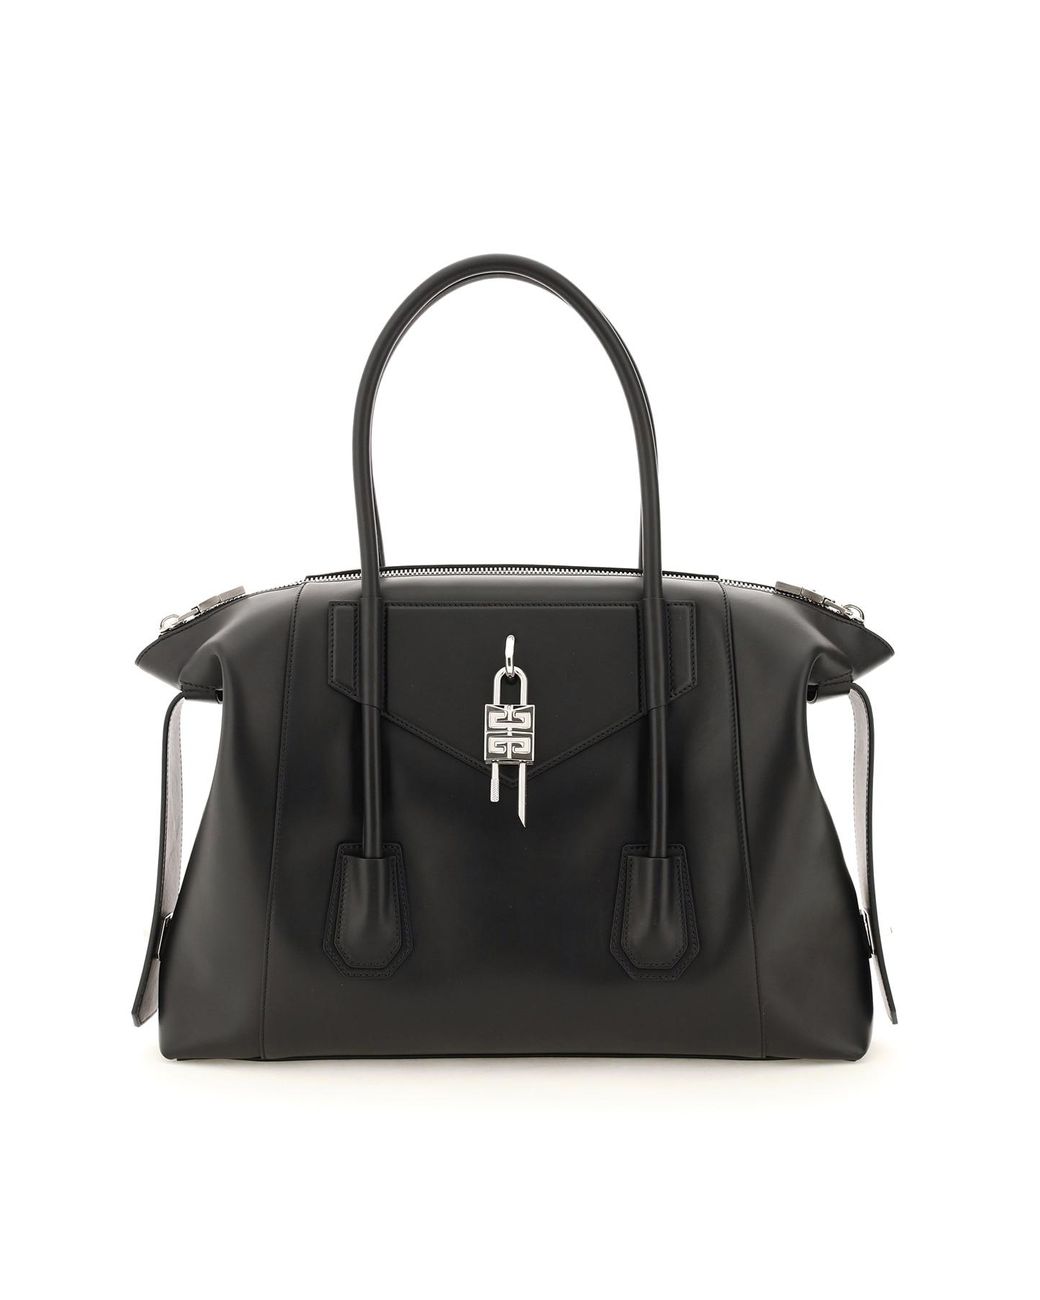 Givenchy Antigona Soft Medium Shoulder Bag in Black | Lyst